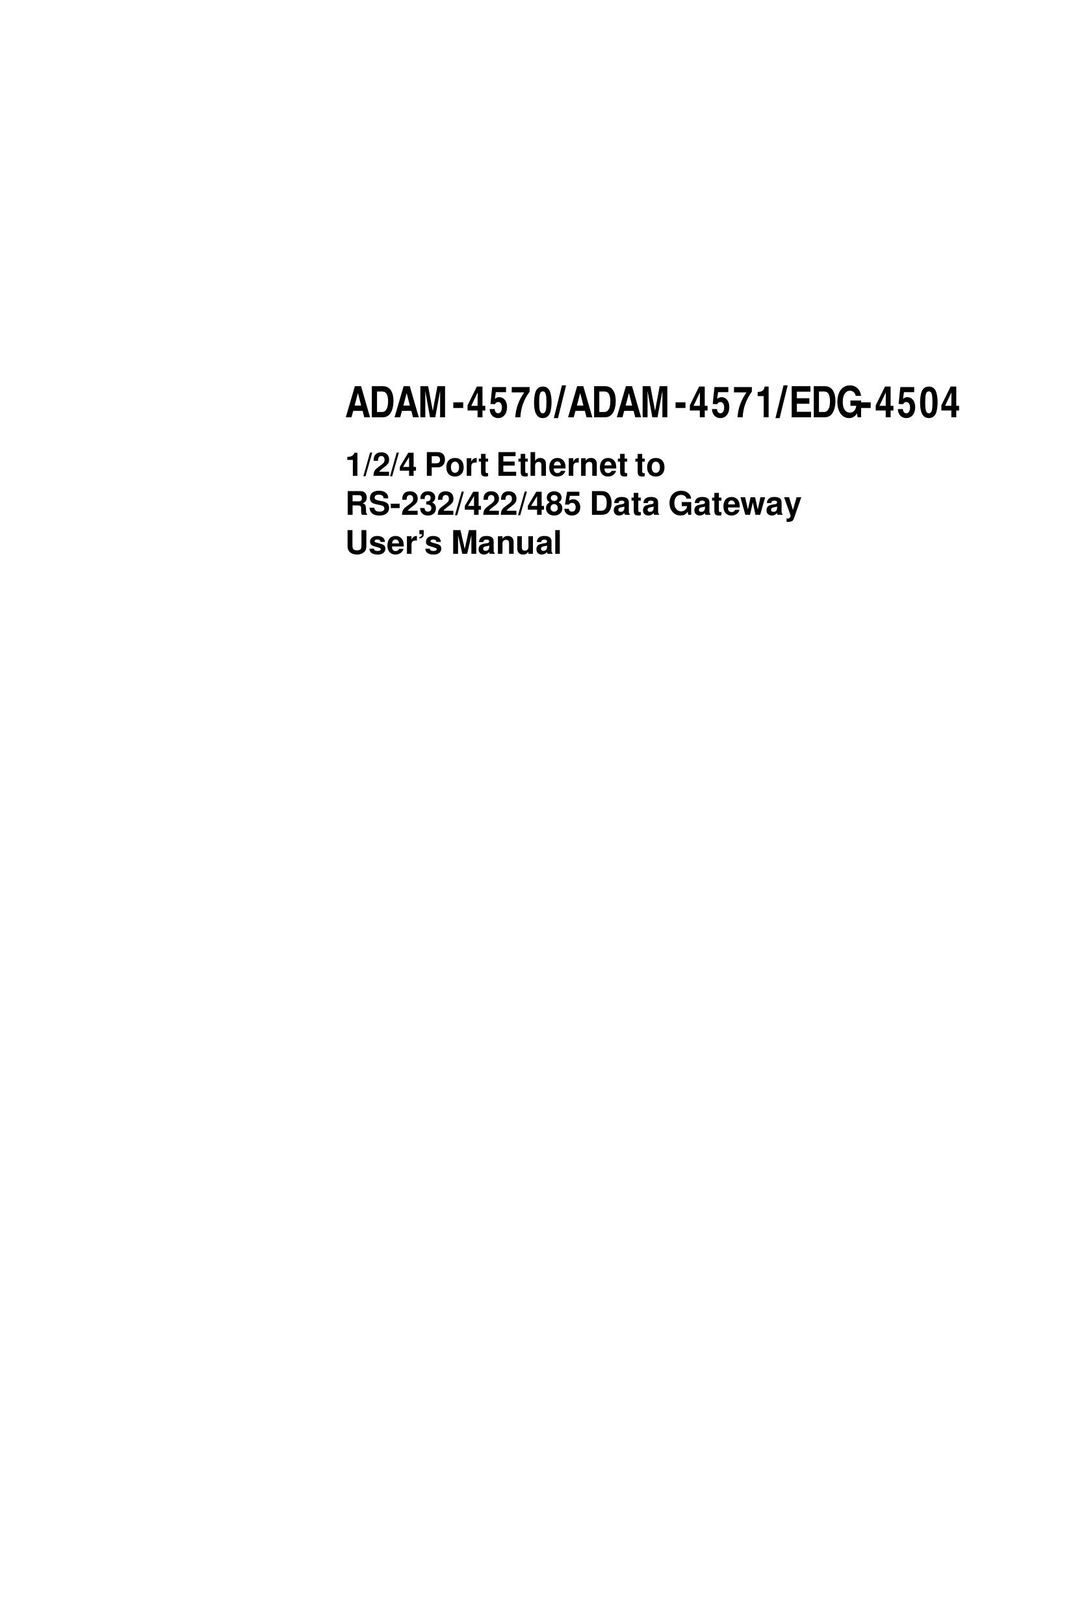 Advantech ADAM-4571 Switch User Manual